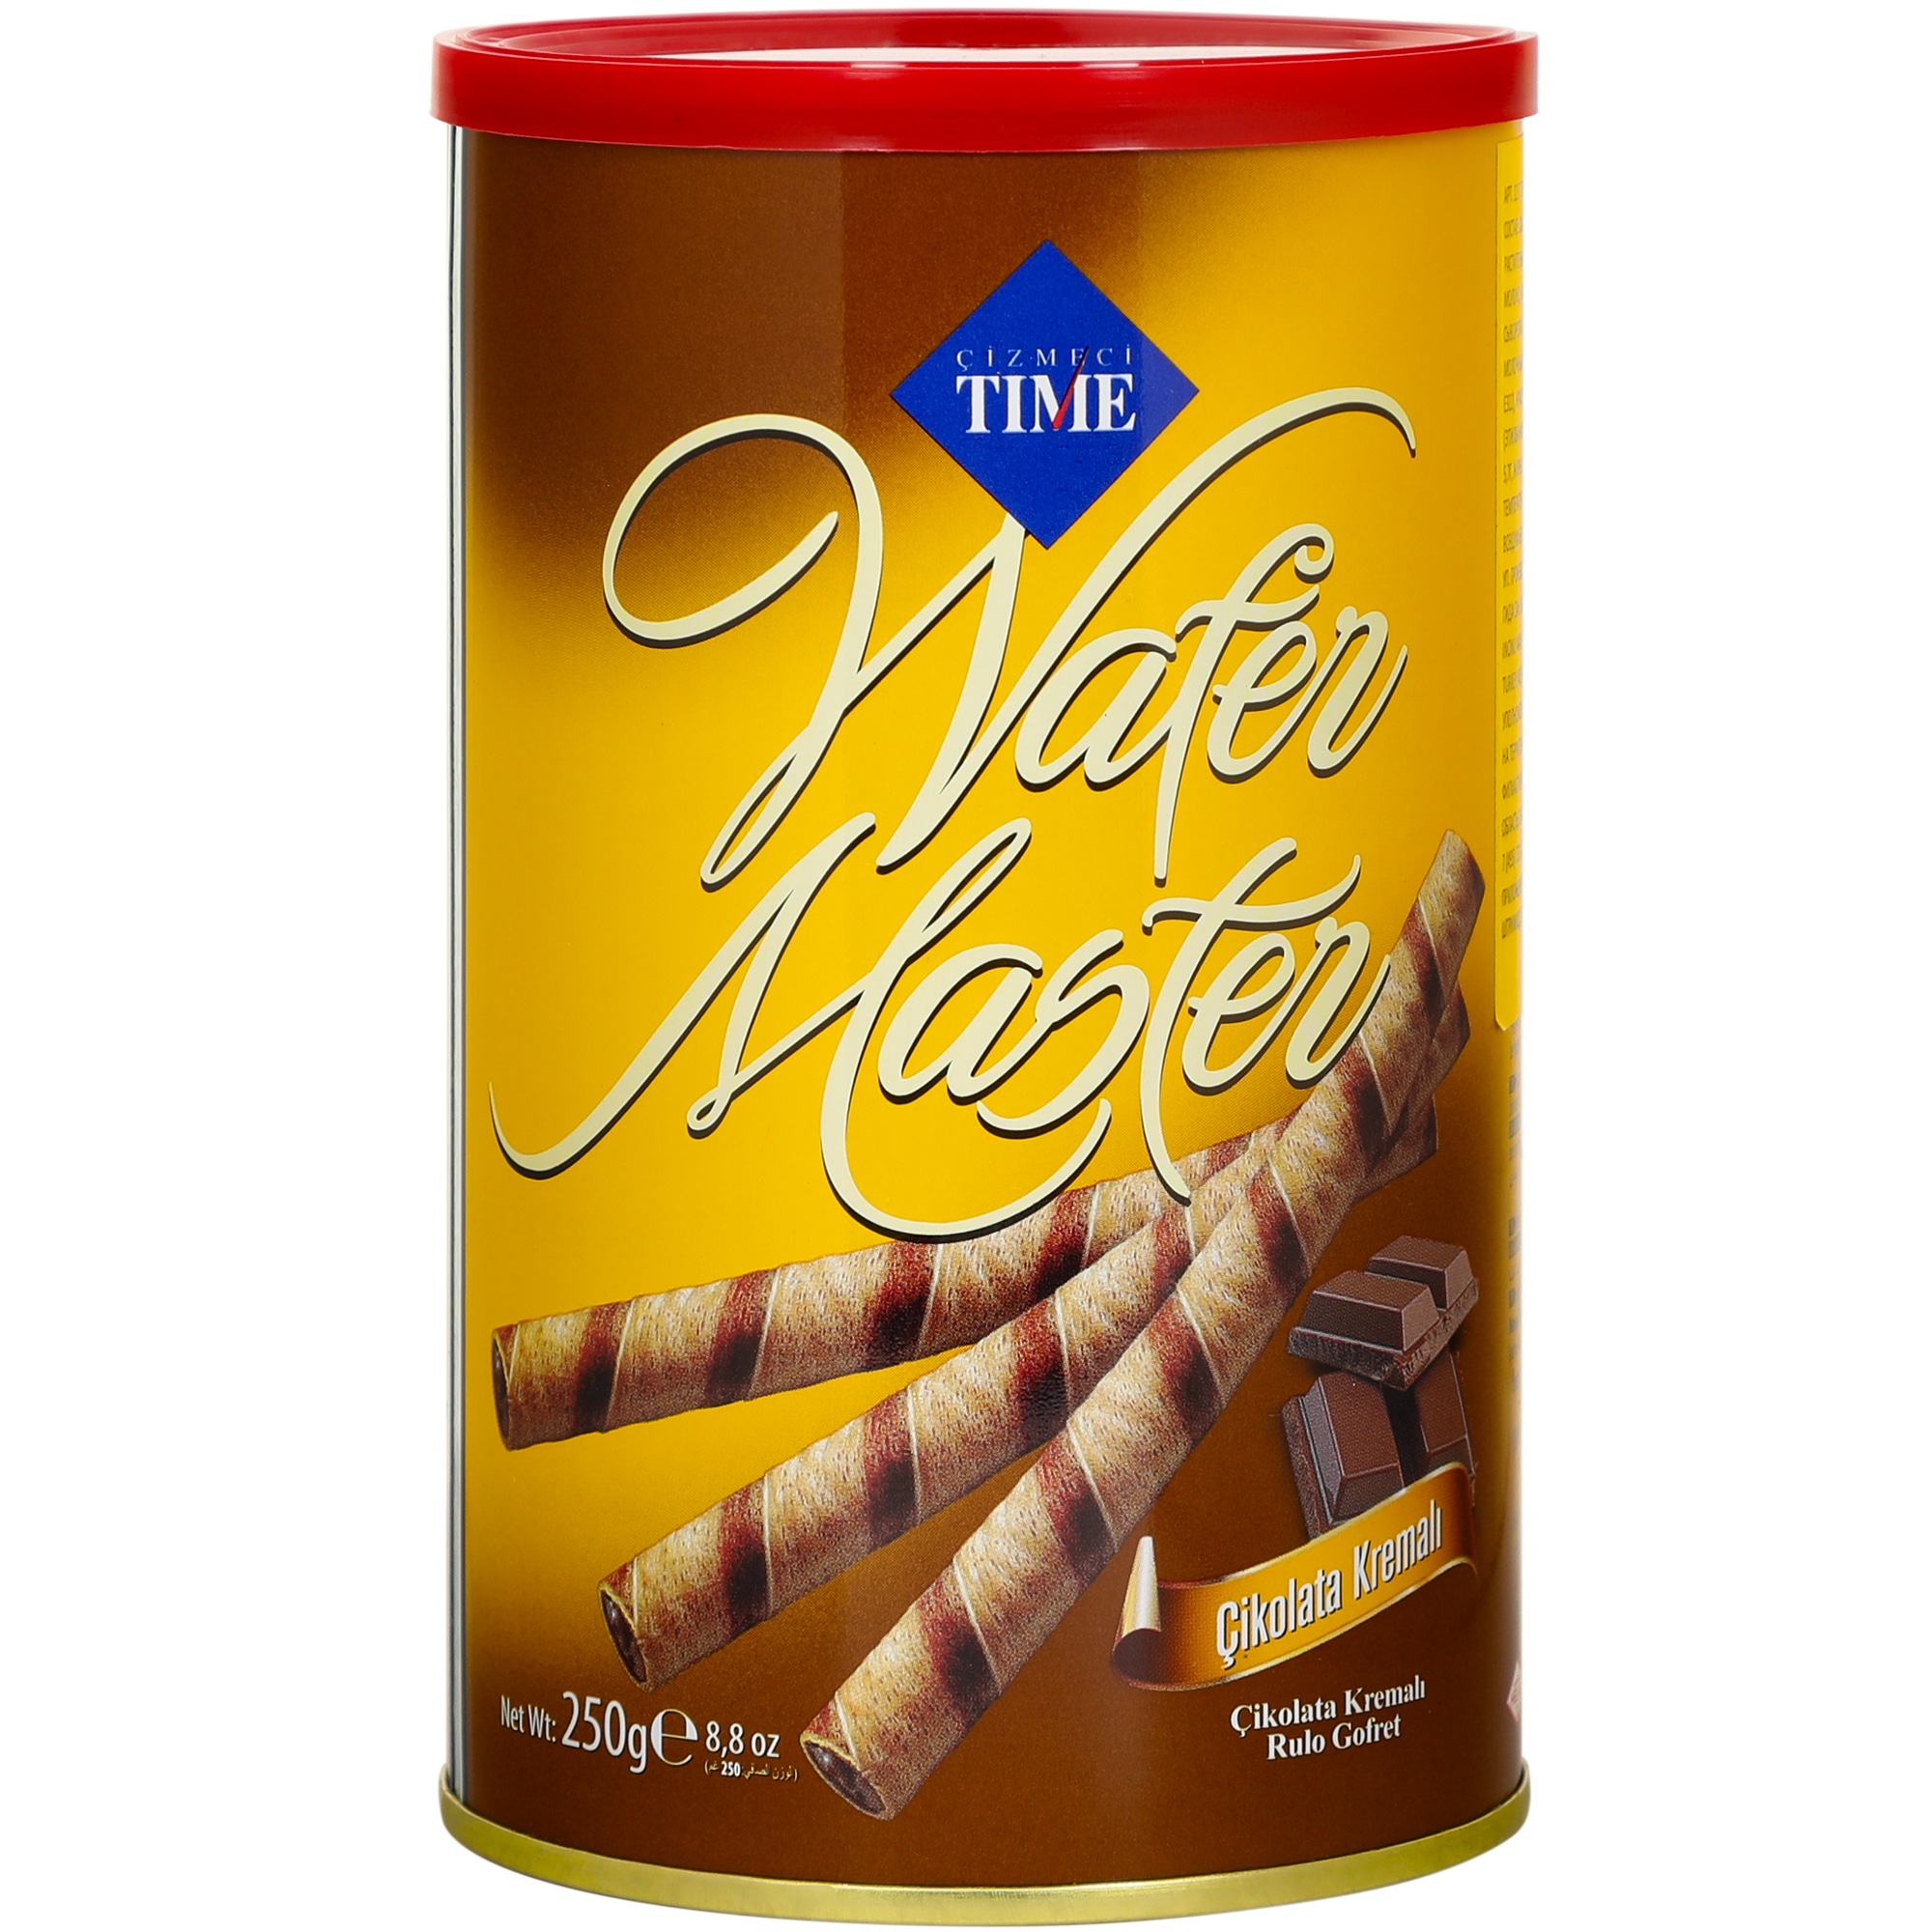 Трубочки Cizmeci Time вафельные wafer master шоколад, 250 г печенье cizmeci time hay hay в шоколаде 100 г карамель